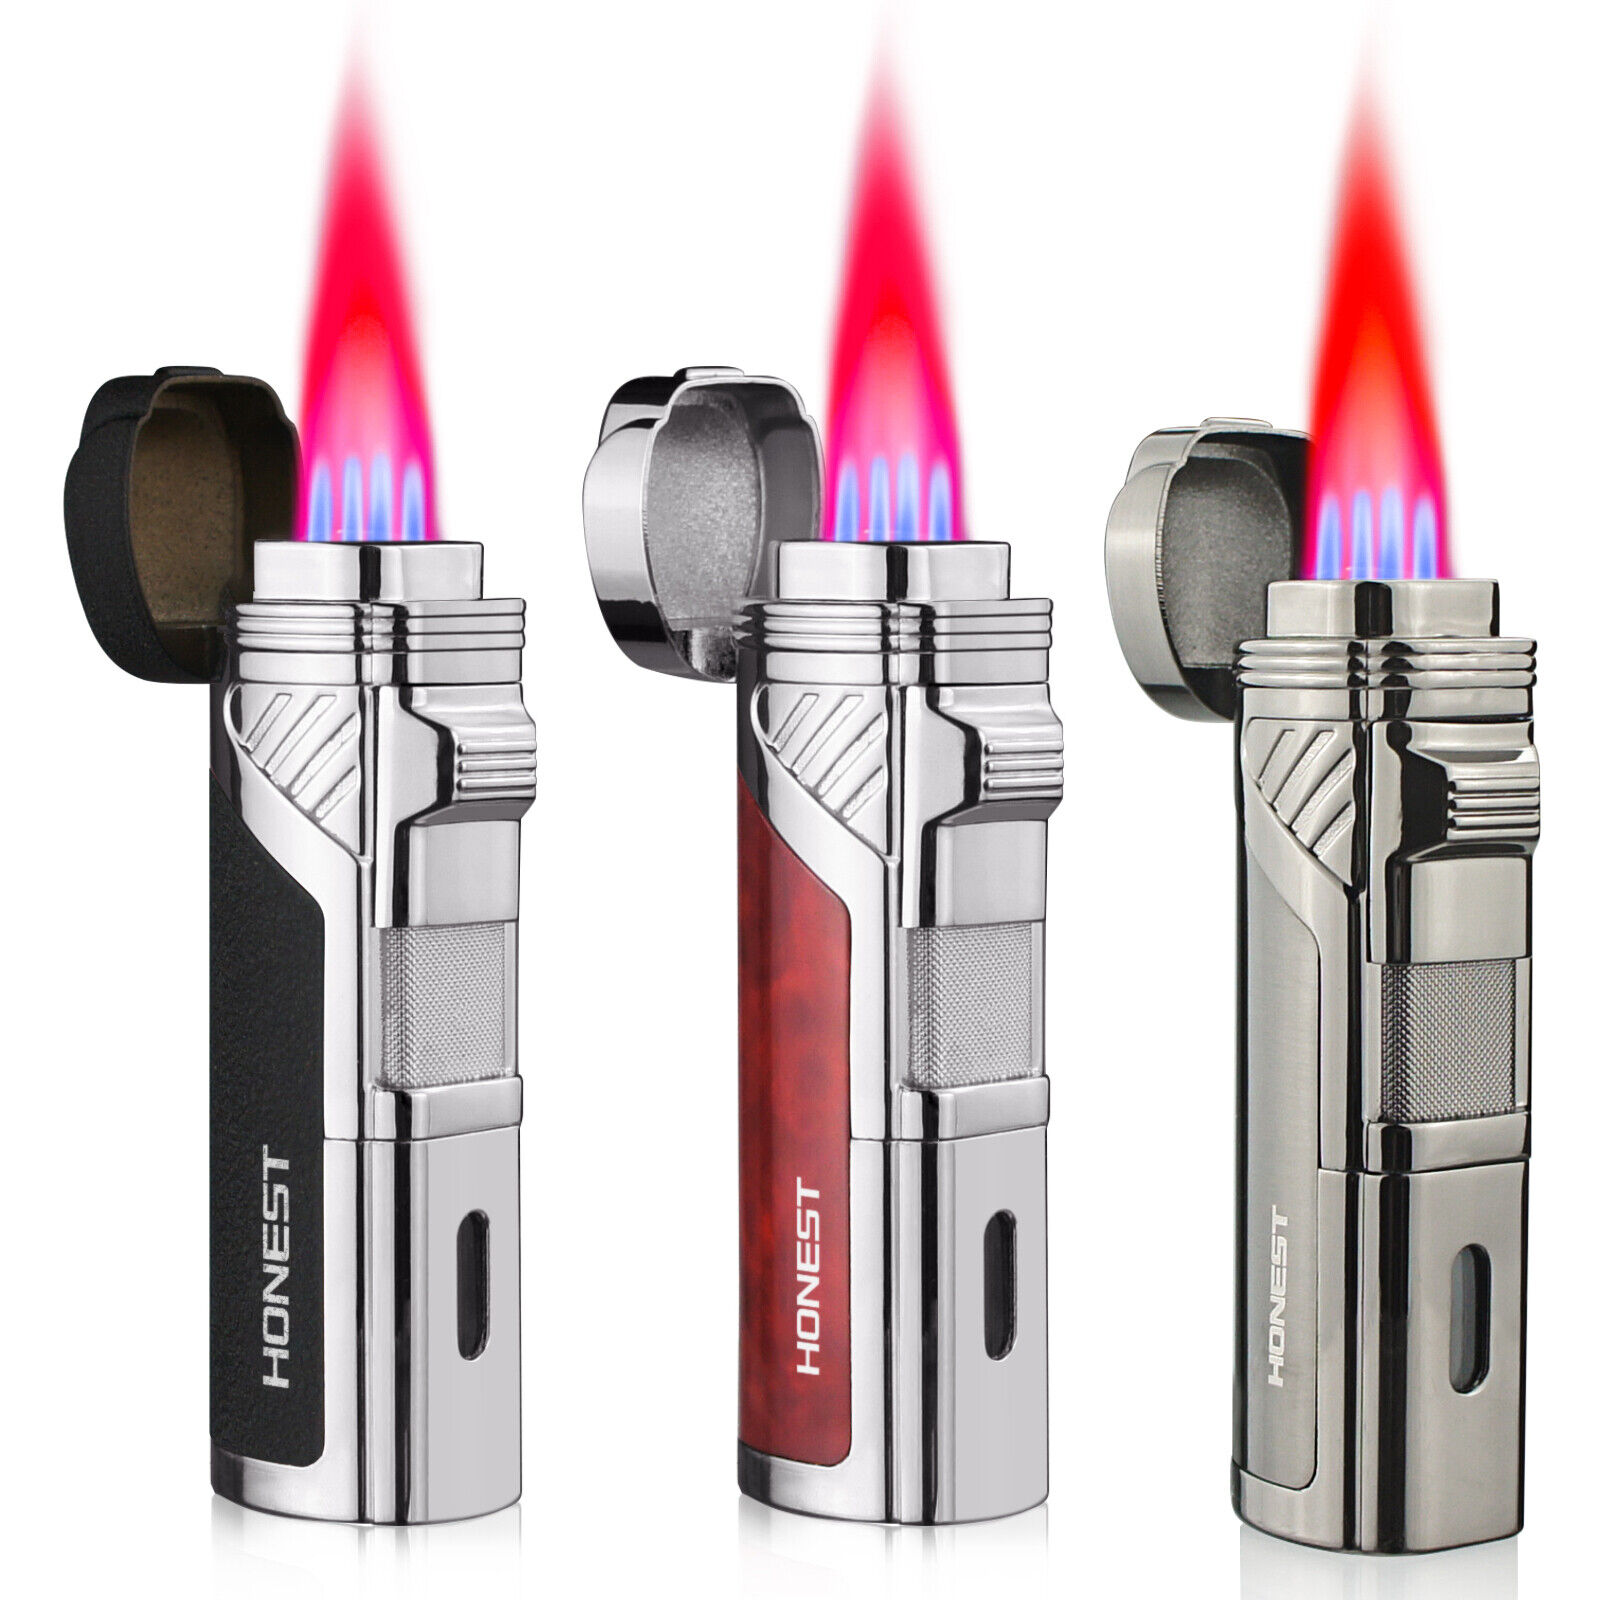 Torch Lighters 4 Jet Flame Butane Lighter Pocket Lighter with Punch Refillable